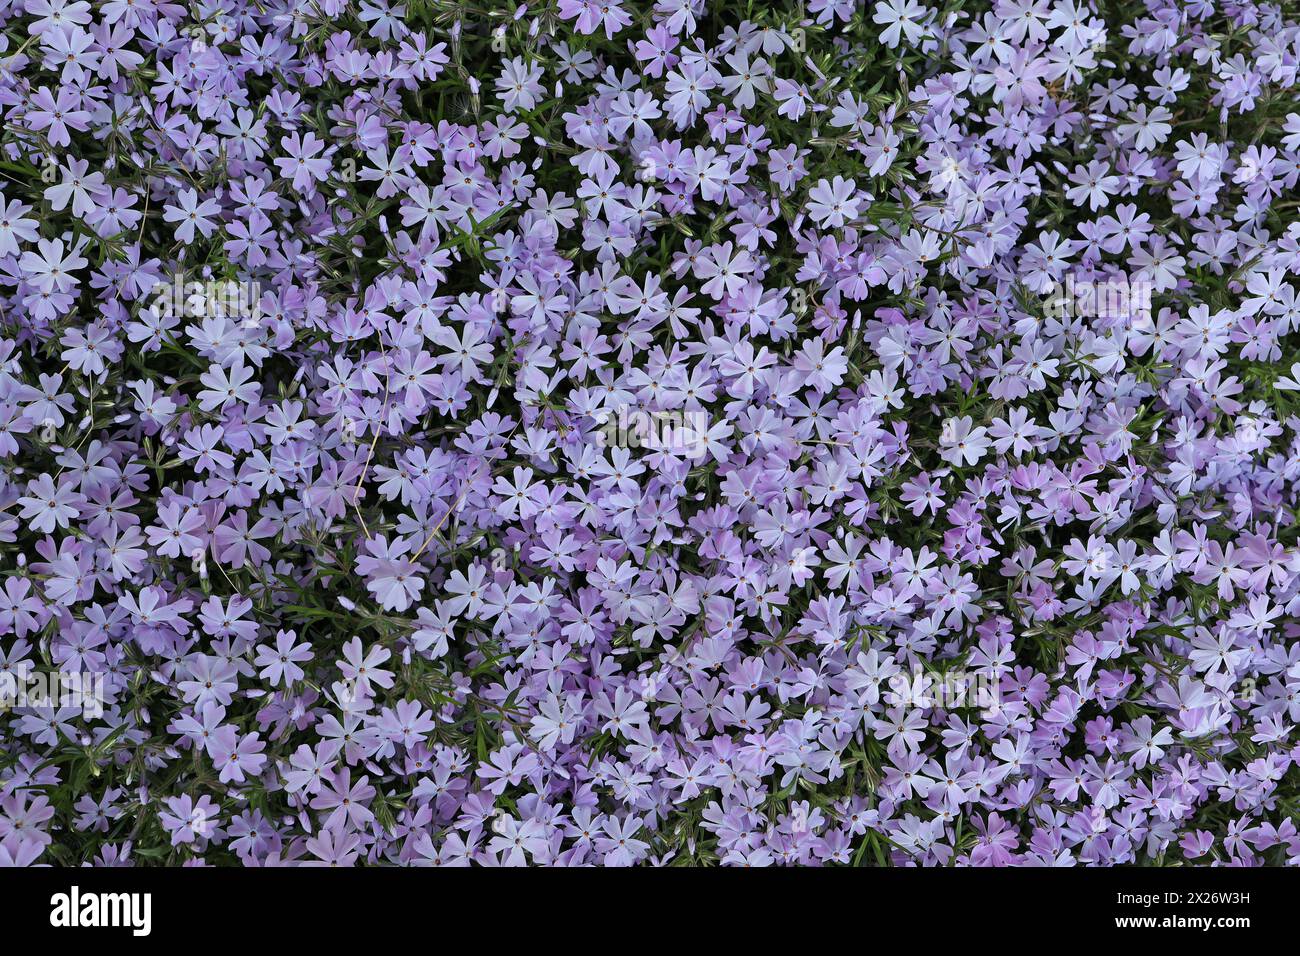 Esuberante fioritura a forma di aquila phlox. Lilac phlox subulate. Sfondo. Phlox subulate. Foto Stock